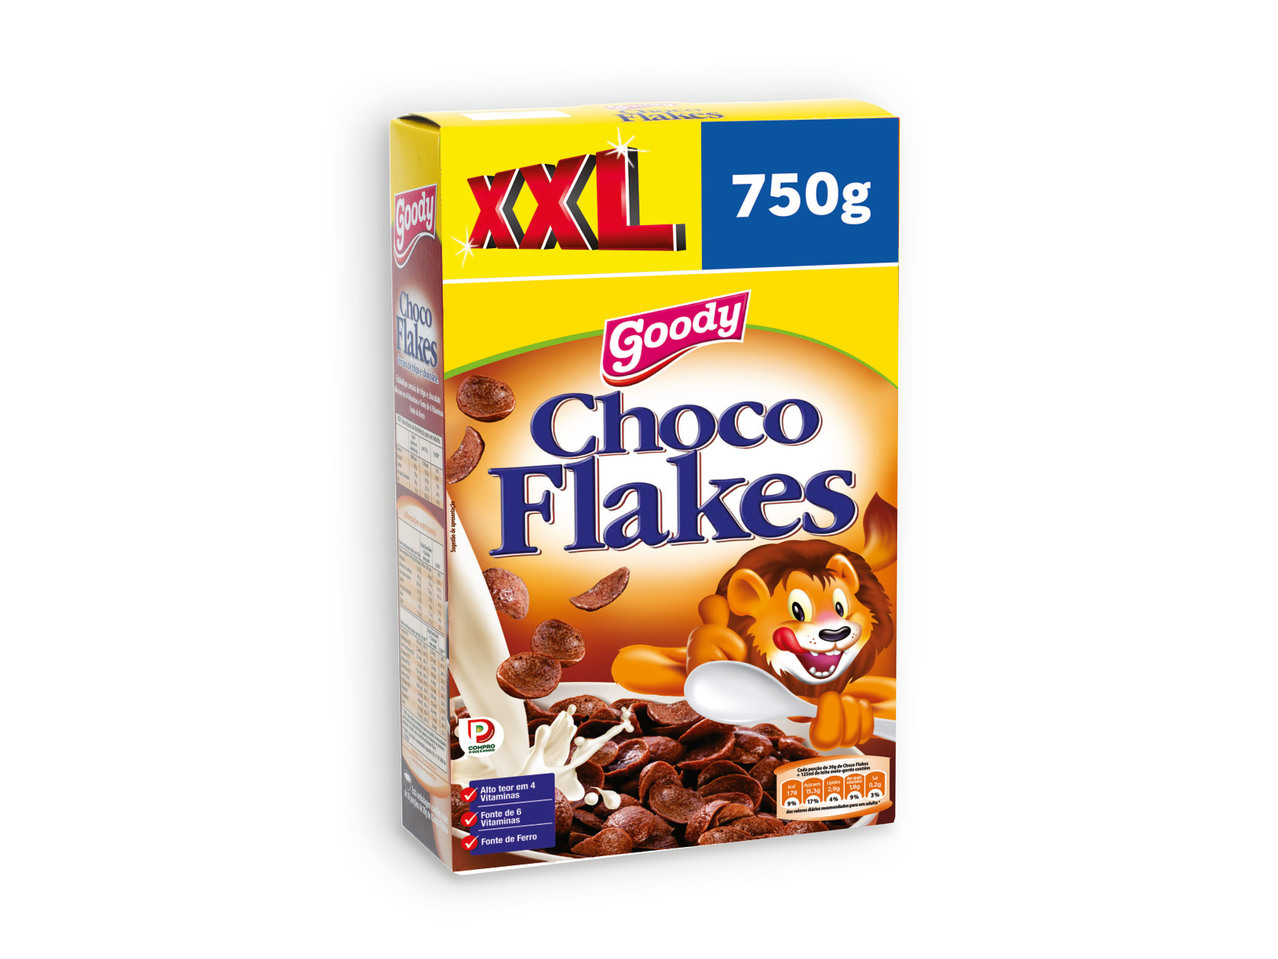 GOODY(R) Choco Flakes